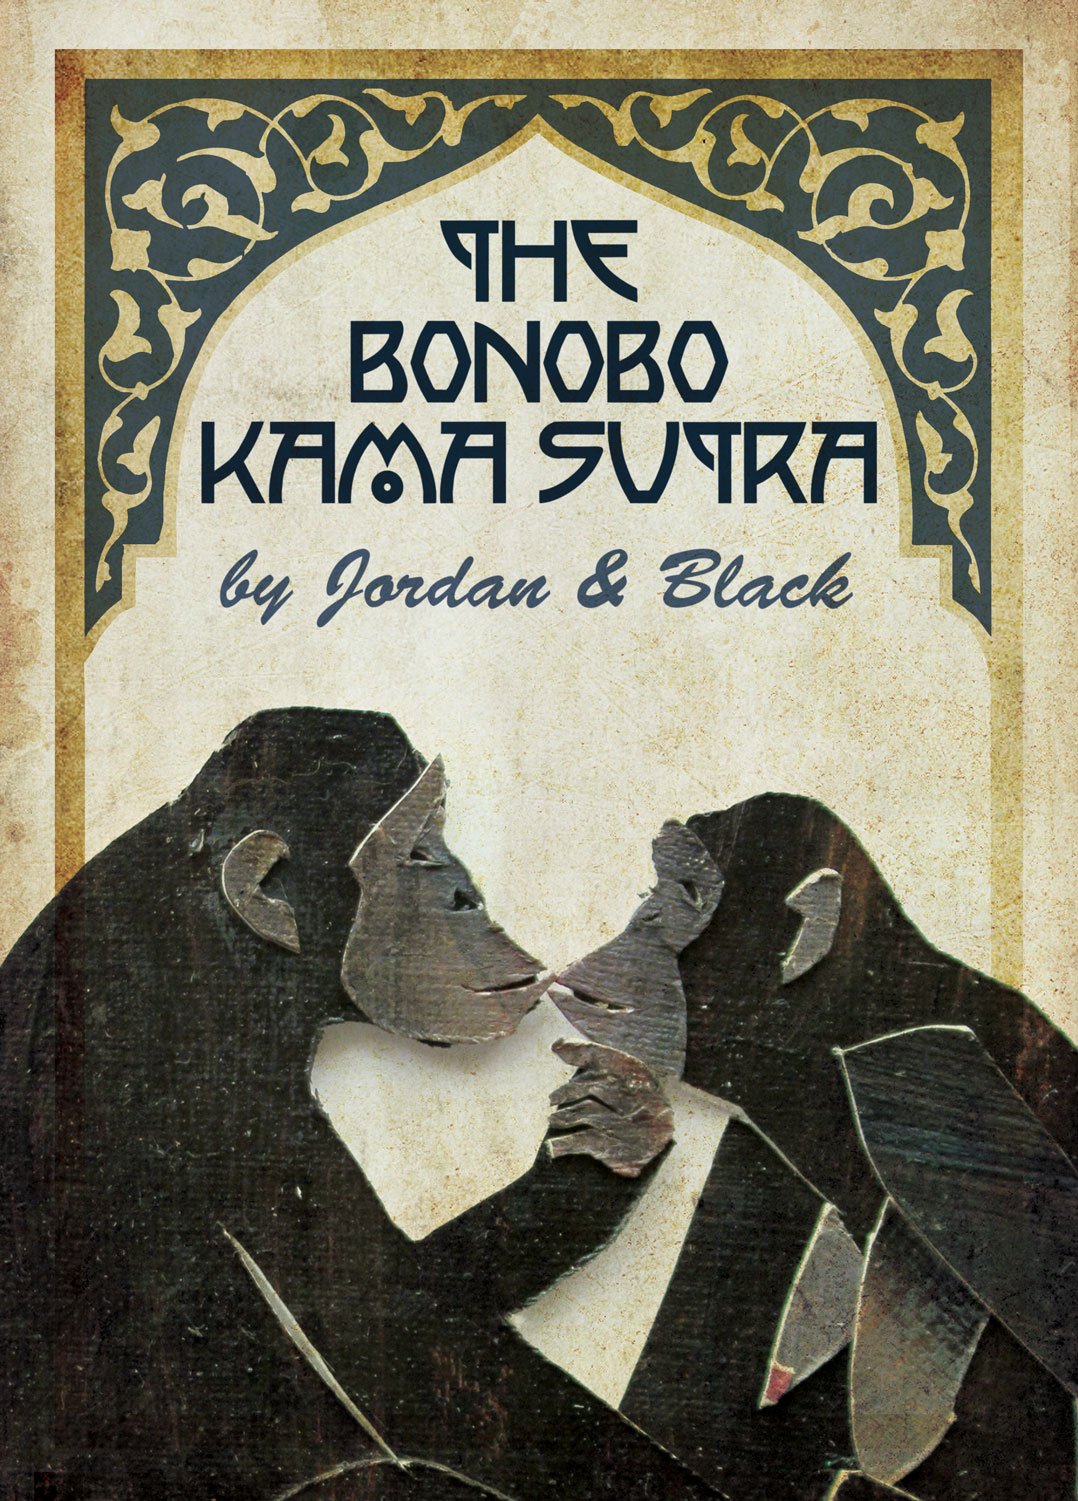 2017: The Bonobo Kama Sutra